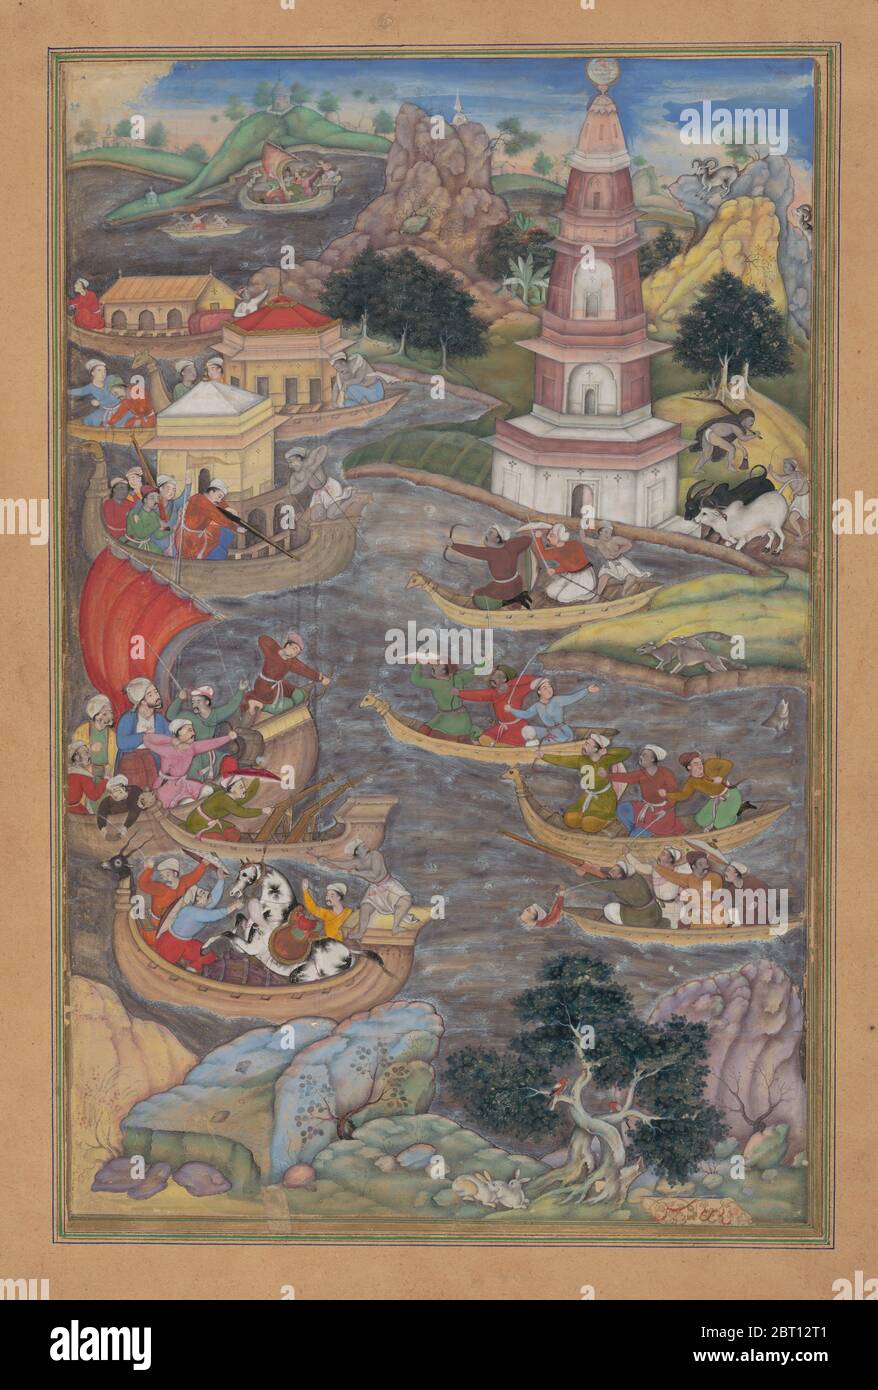 Alexander Fights a Sea Battle, Folio from a Khamsa (Quintet) of Amir Khusrau Dihlavi, 1597-98. Stock Photo